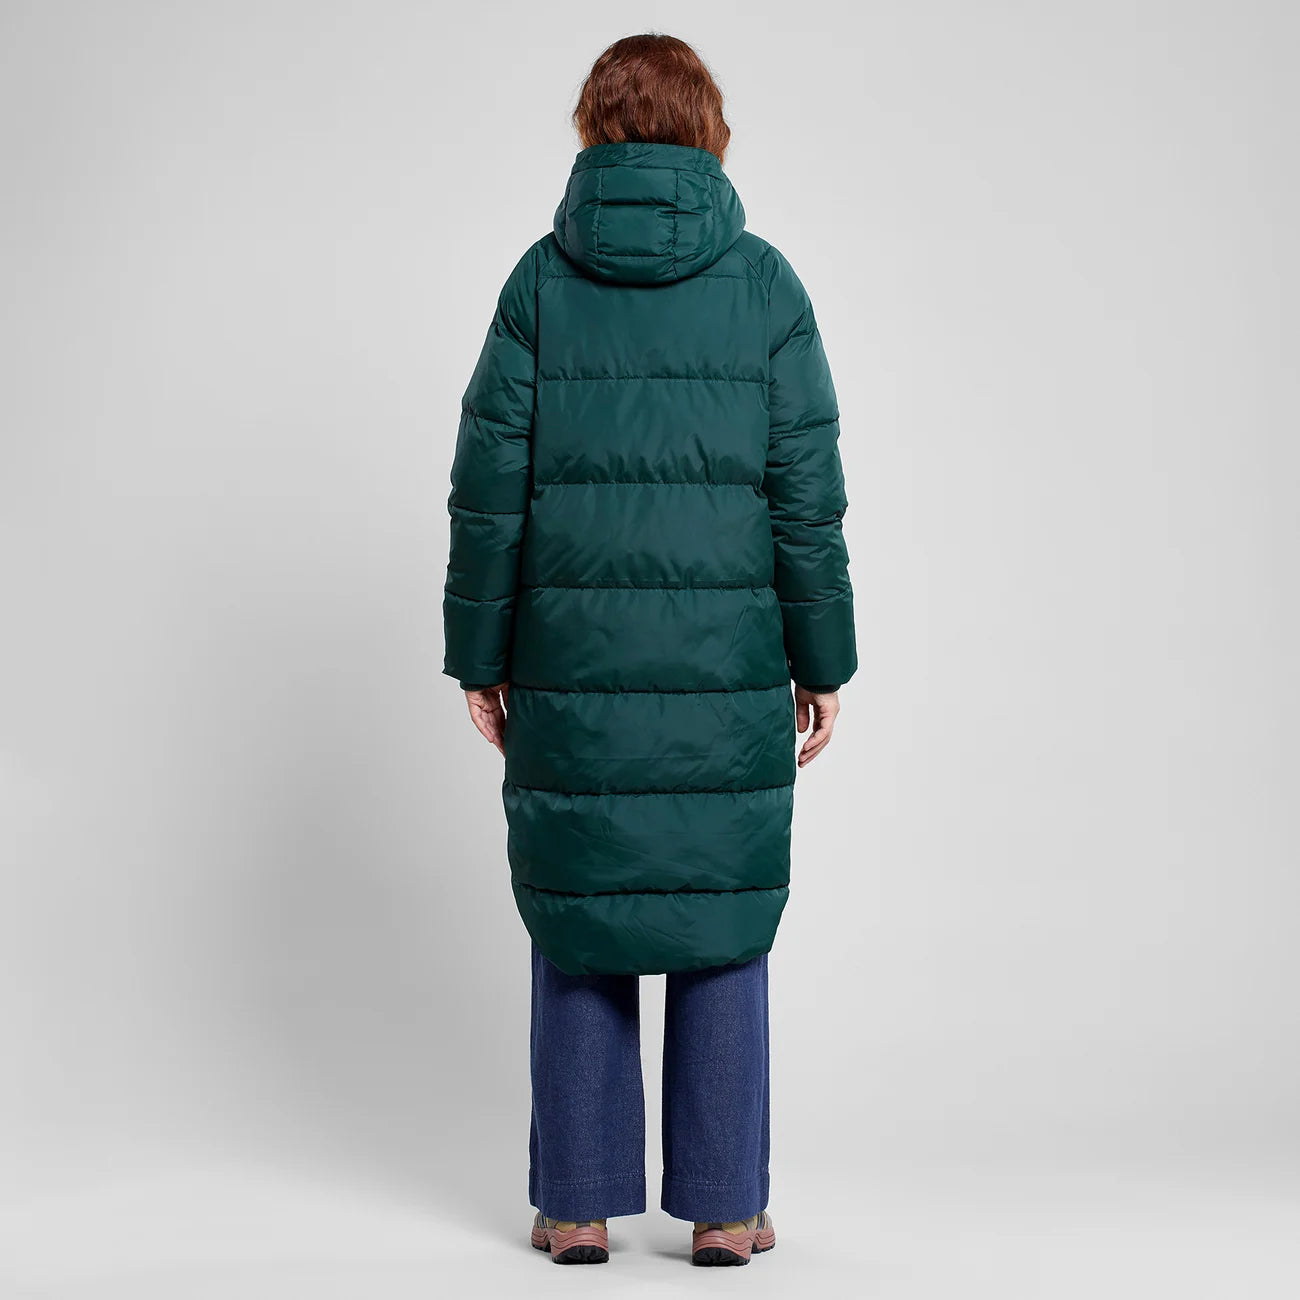 Puffer winter coat in Pine Green